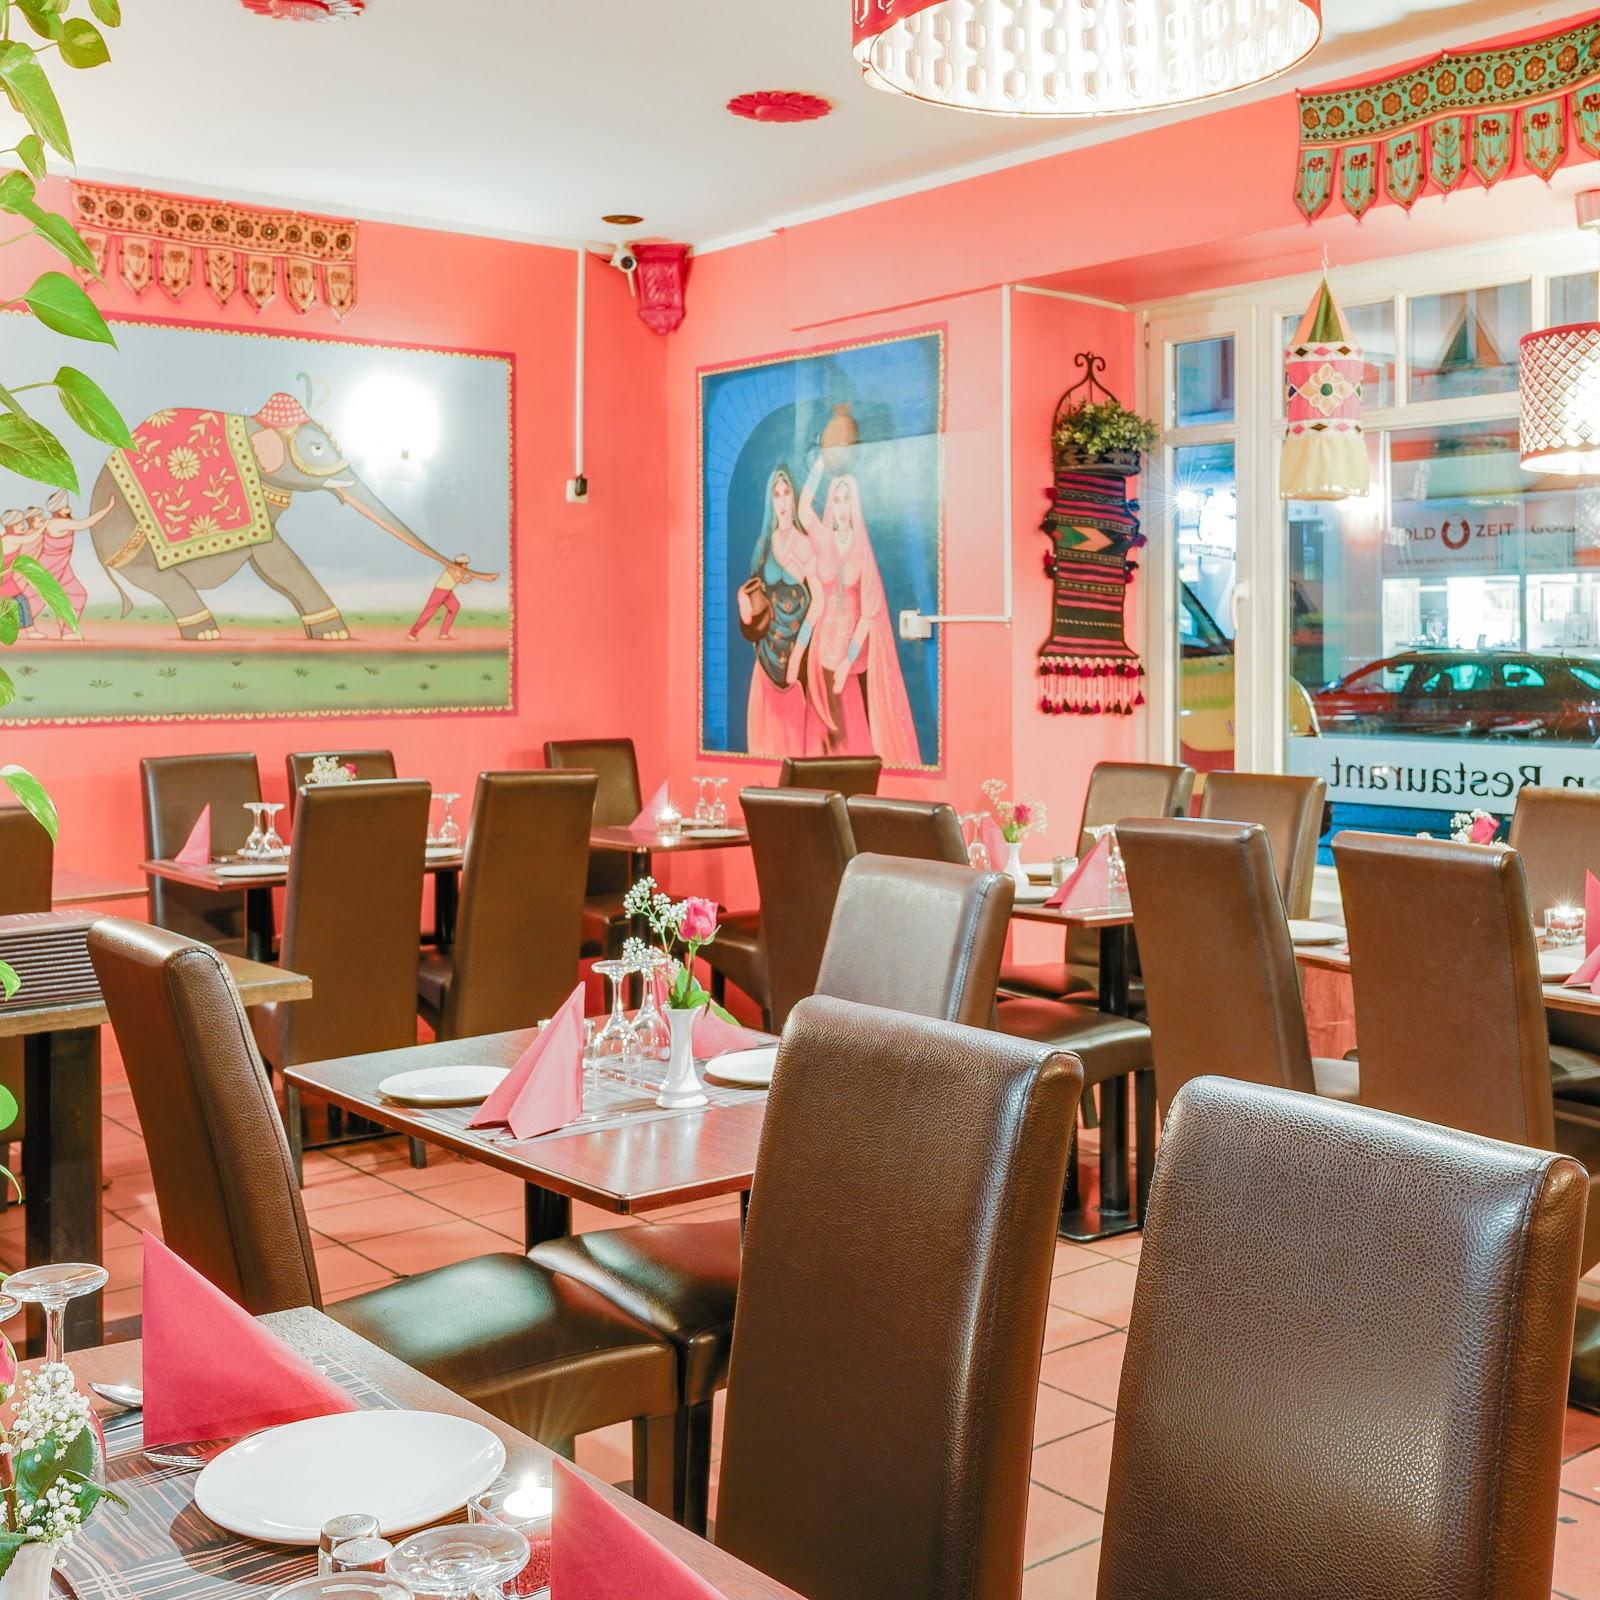 Restaurant "Tasty India" in Köln